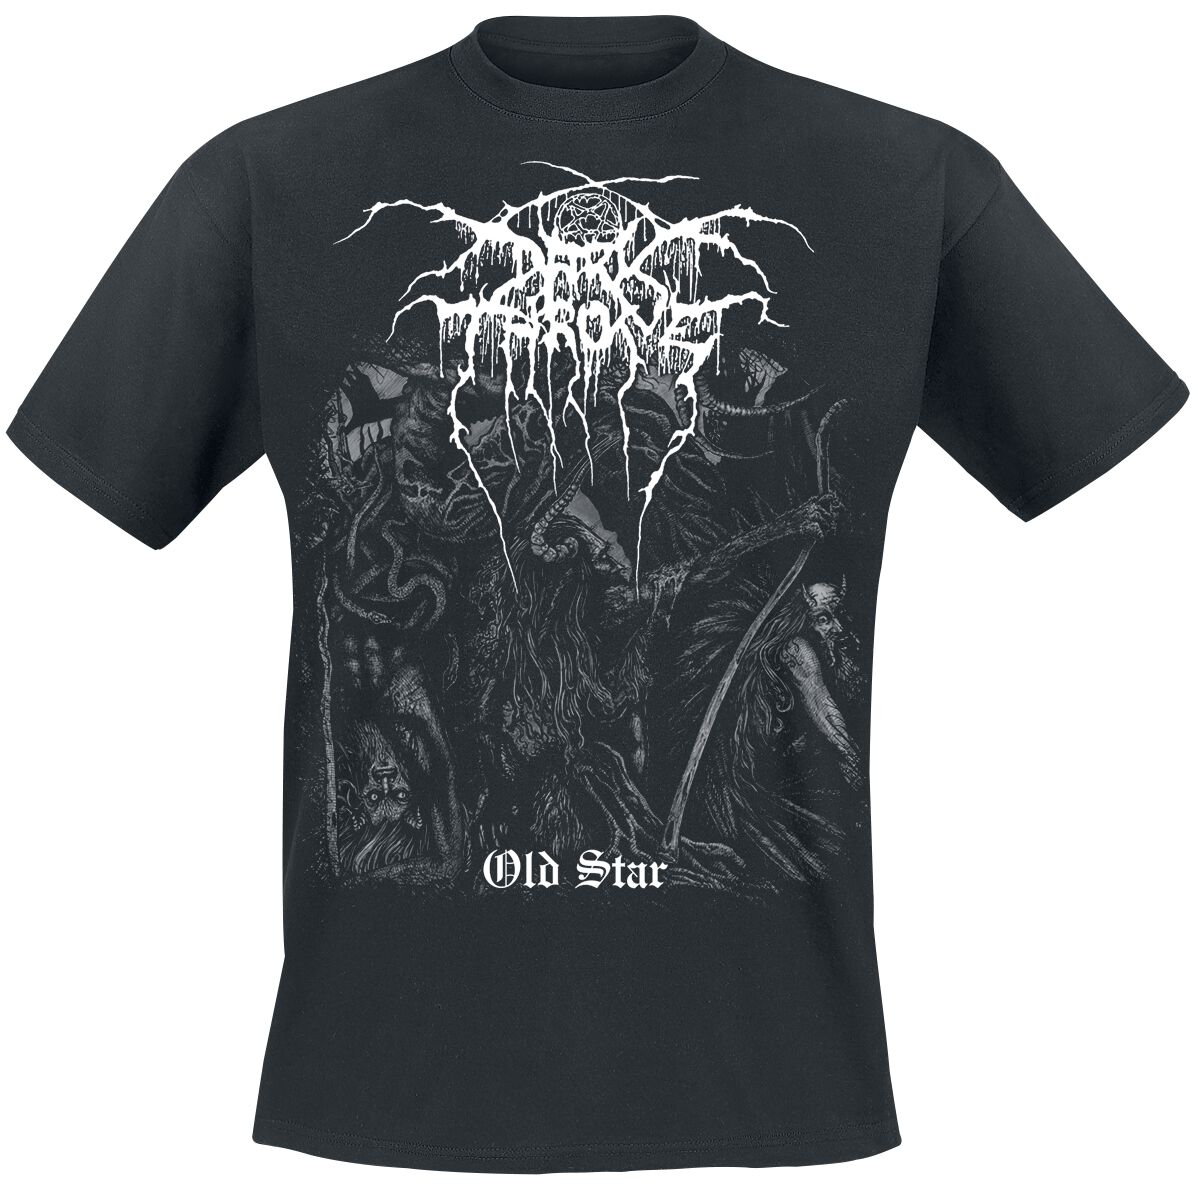 Image of T-Shirt di Darkthrone - Old Star - M a XXL - Uomo - nero